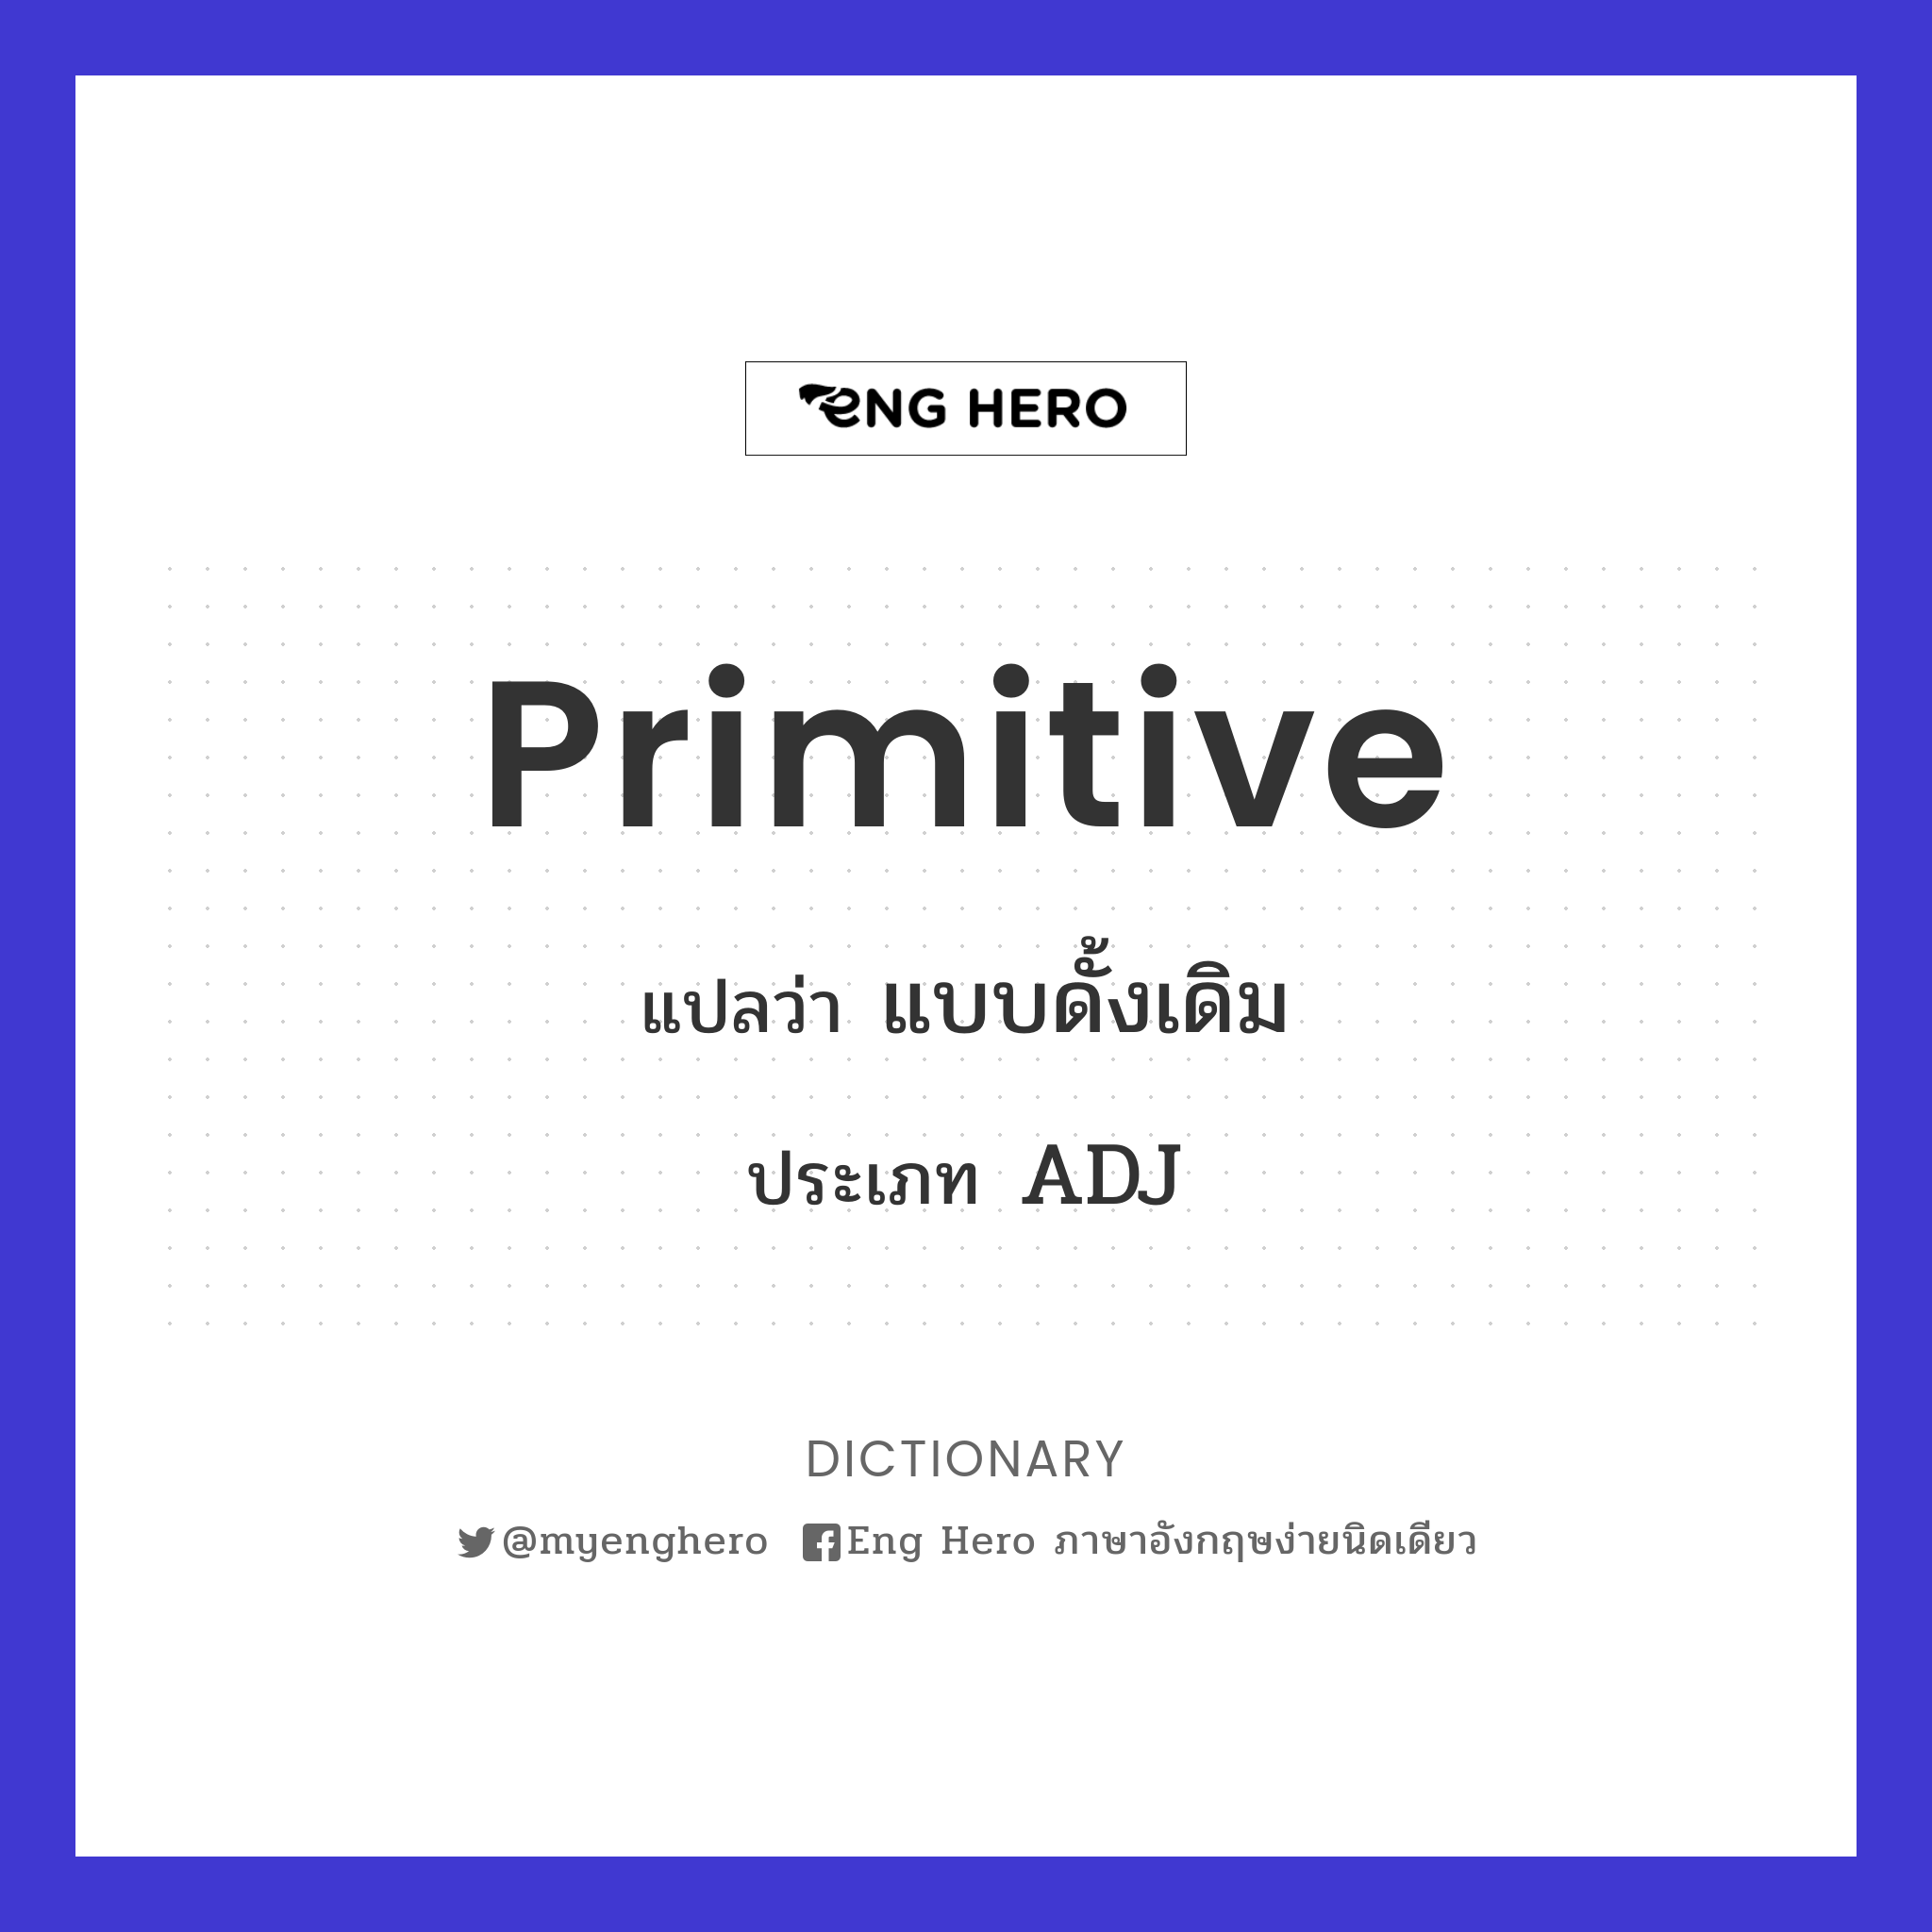 primitive